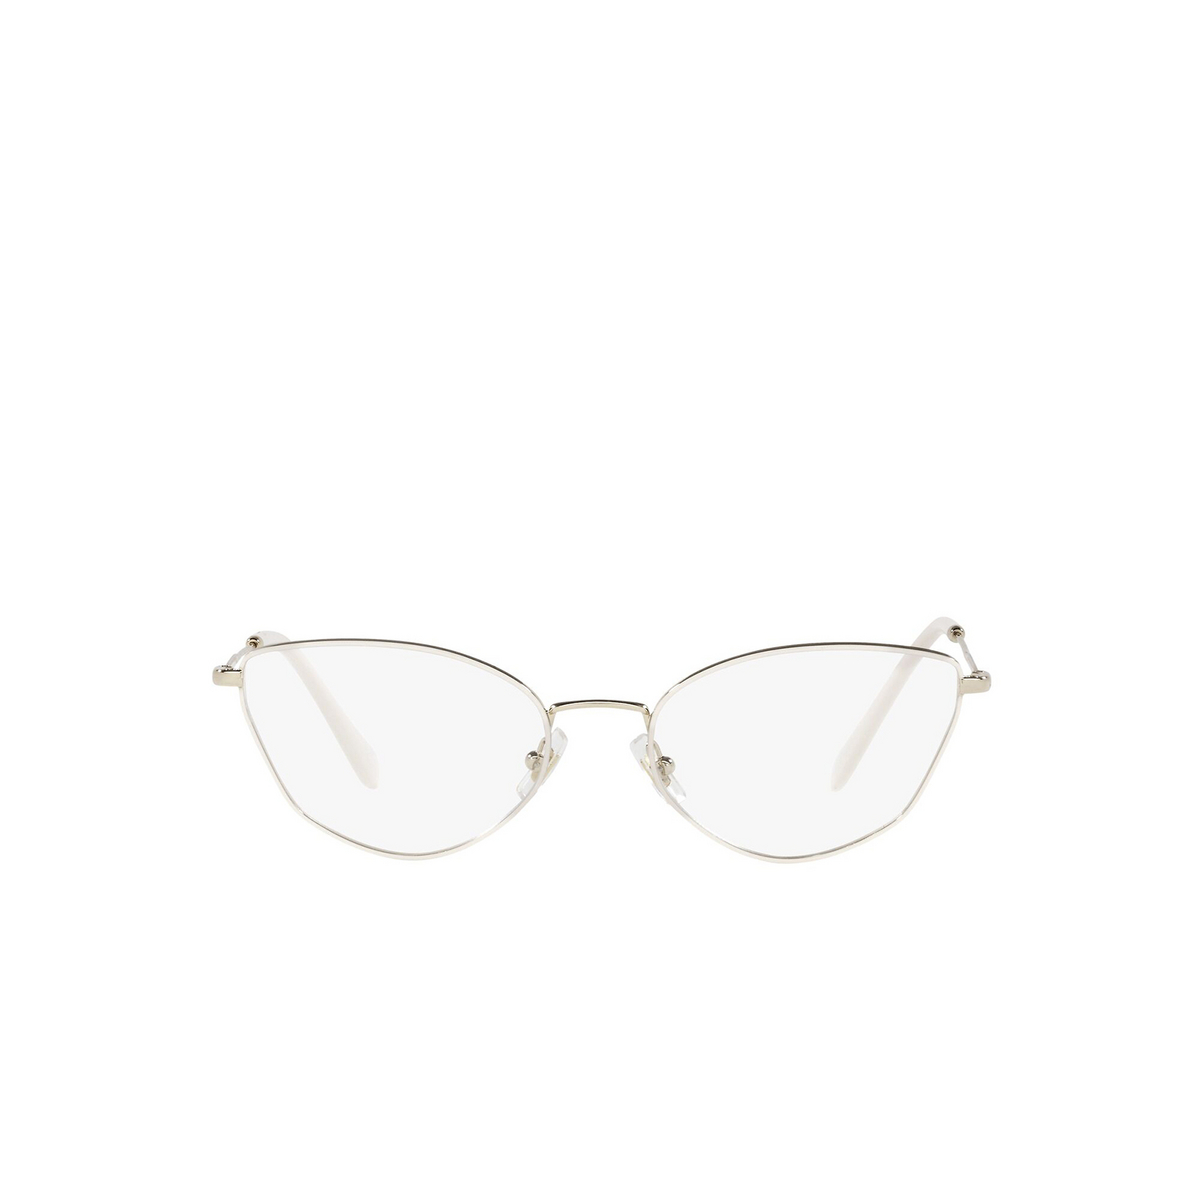 Miu Miu® Cat-eye Eyeglasses: MU 51SV color Ivory 2821O1 - front view.